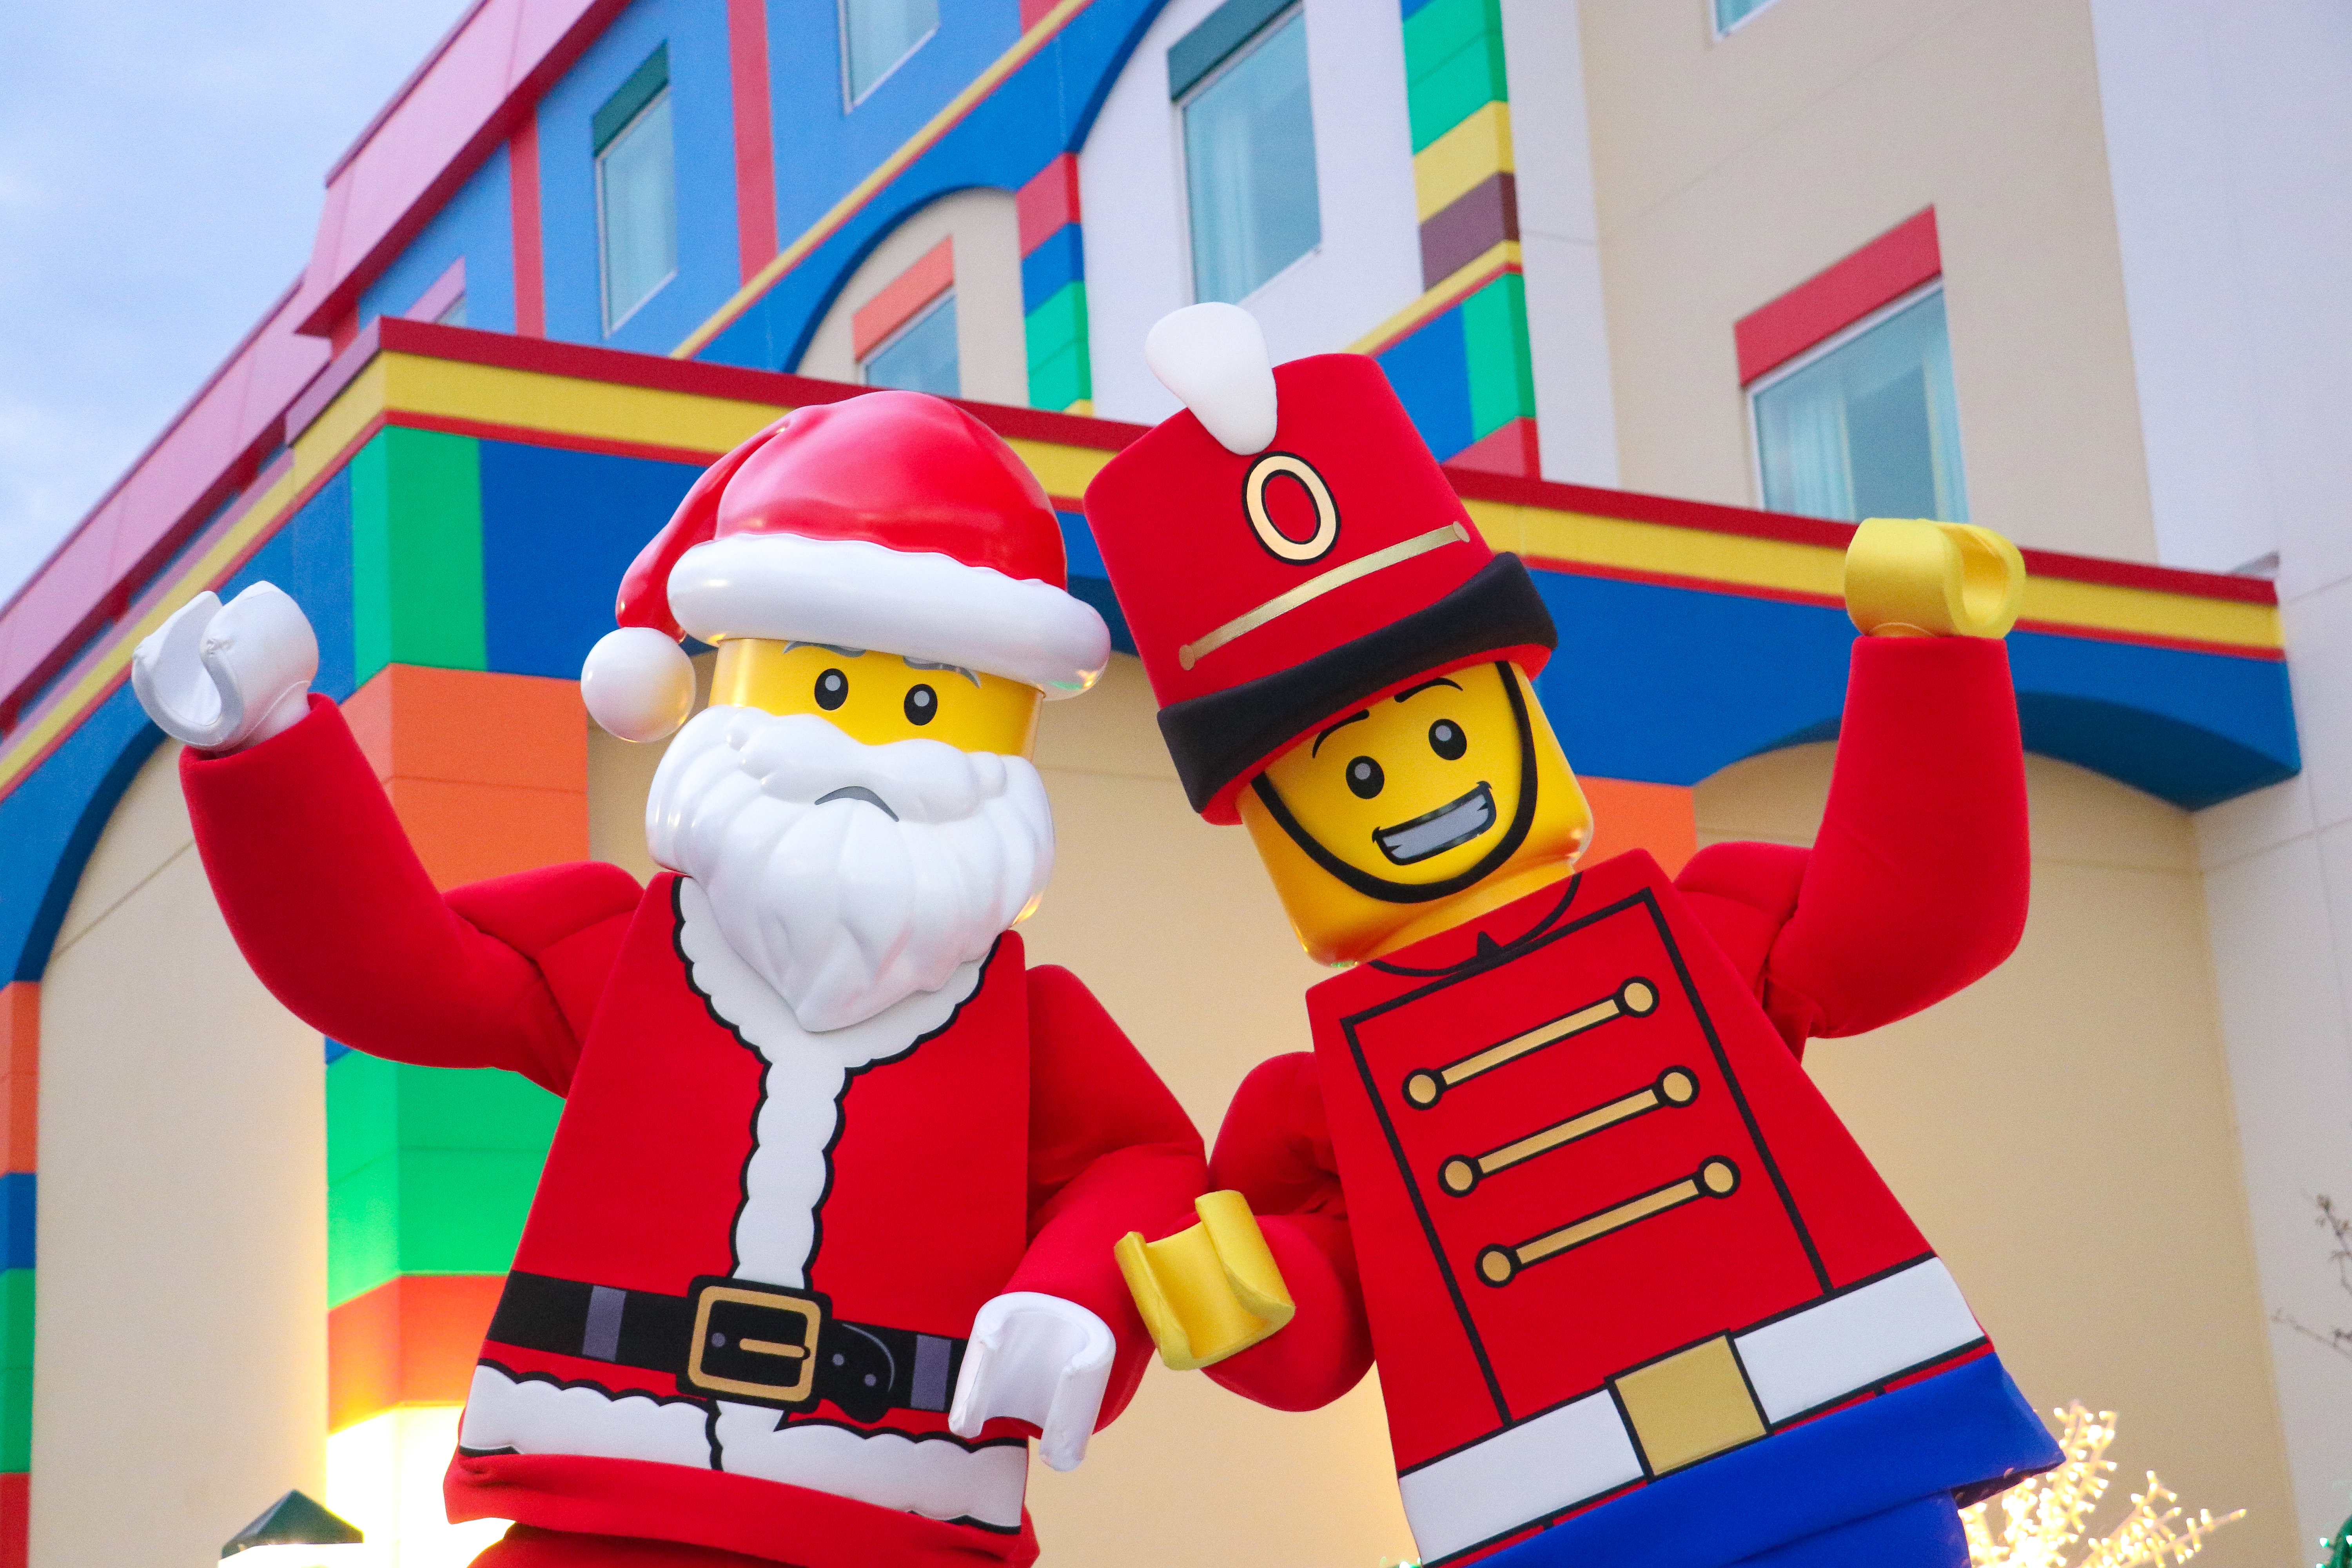 LEGO Santa and Drumz